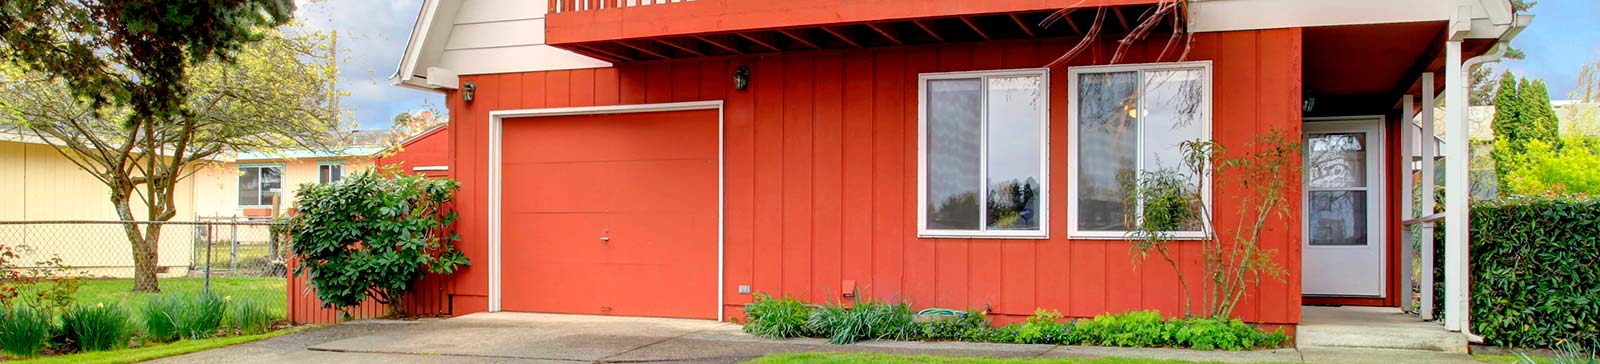 Garage Door Repair Pros Near Clearwater FL Area